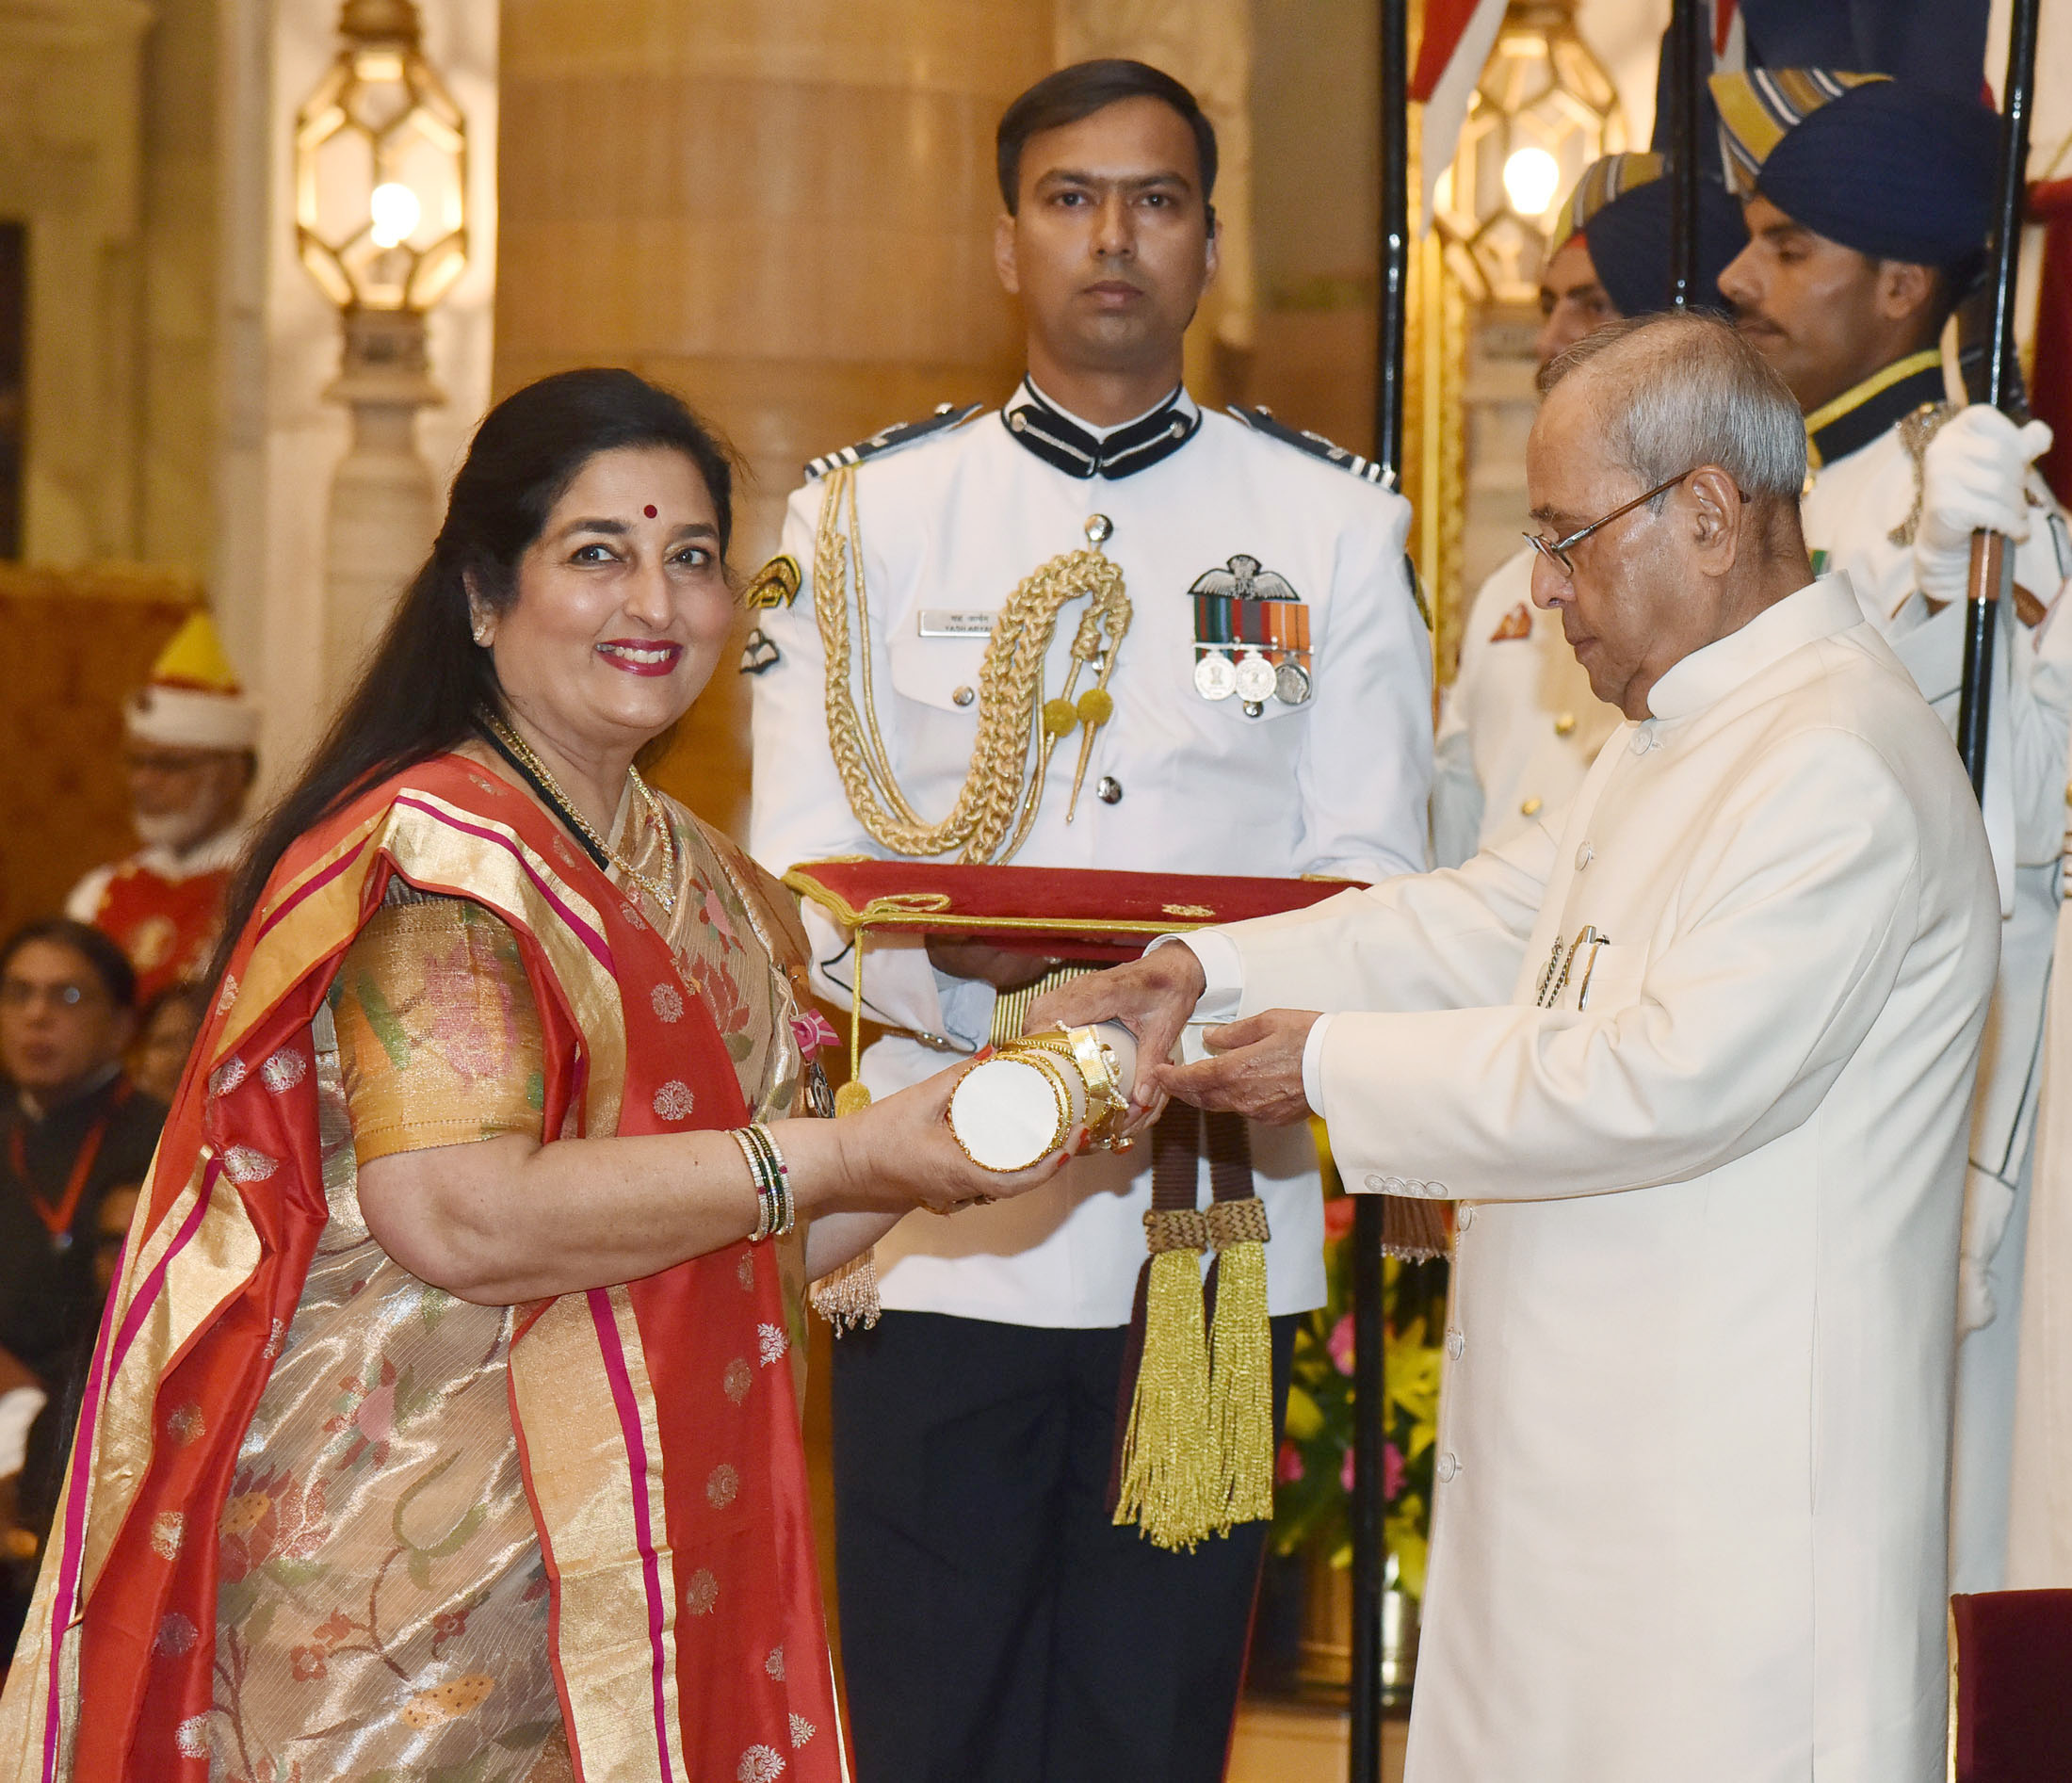 The President, Shri Pranab Mukherjee presenting the Padma Shri Award to Dr. Anuradha Paudwal, at a Civil Investiture Ceremony, at Rashtrapati Bhavan, in New Delhi on March 30, 2017.